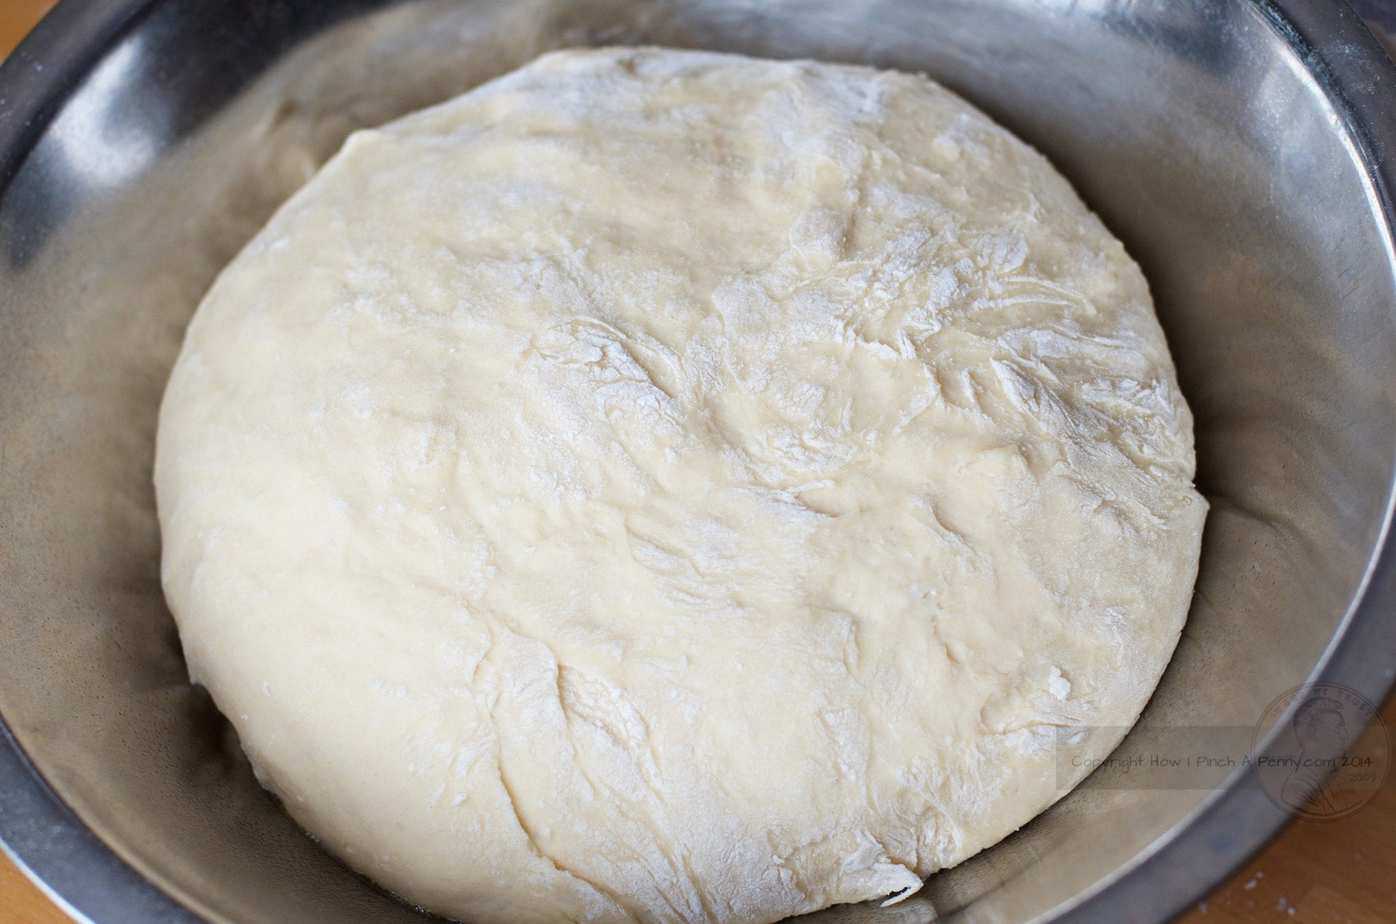 Fastnachts recipe dough in a bowl